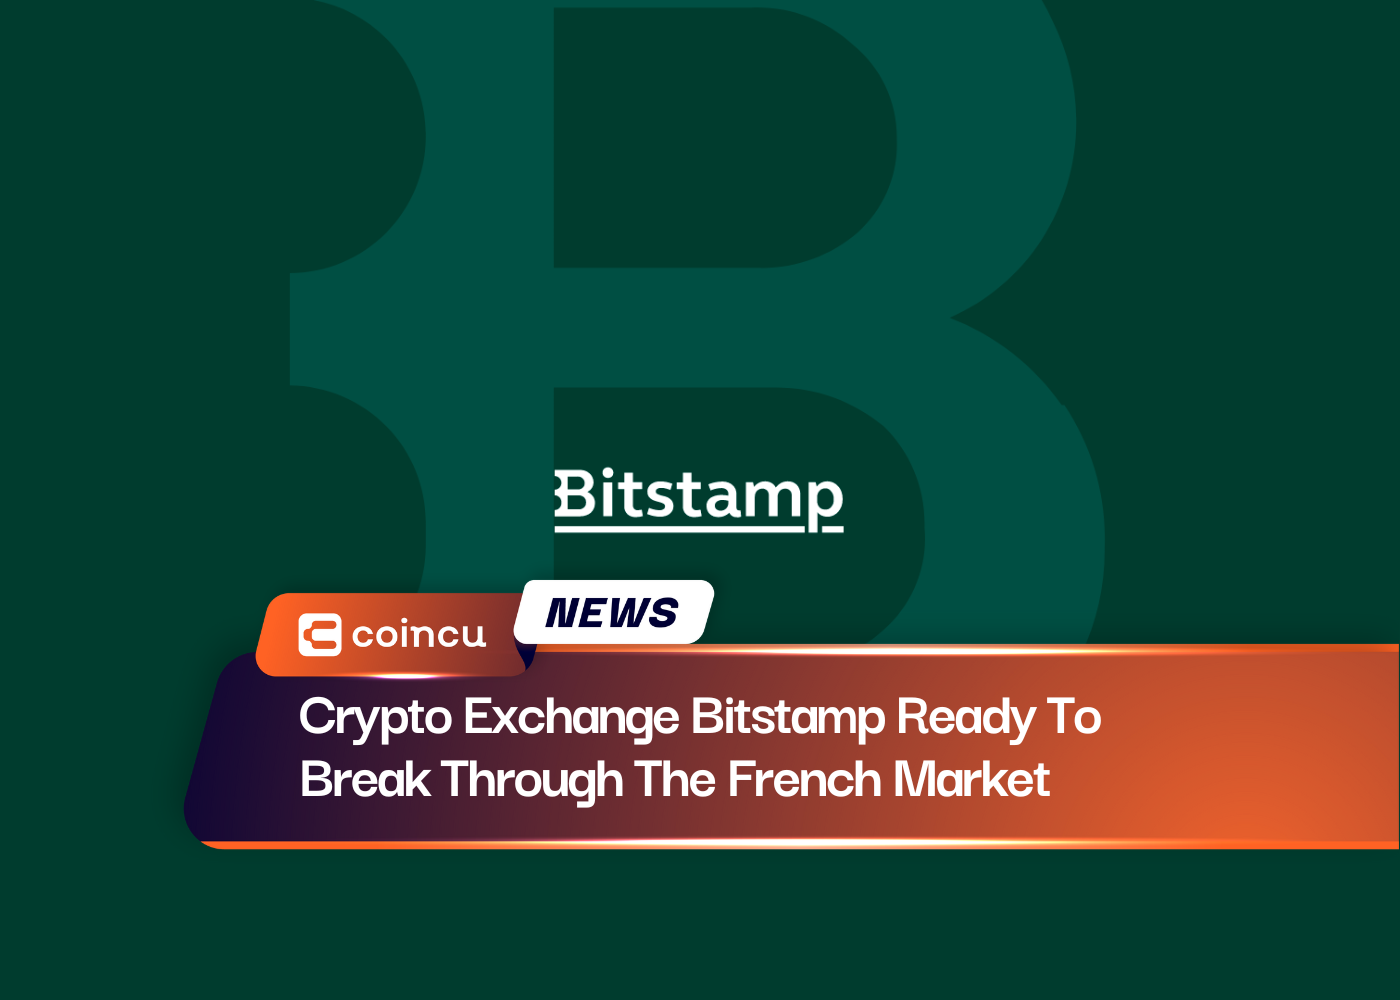 Crypto Exchange Bitstamp pronto para romper o mercado francês